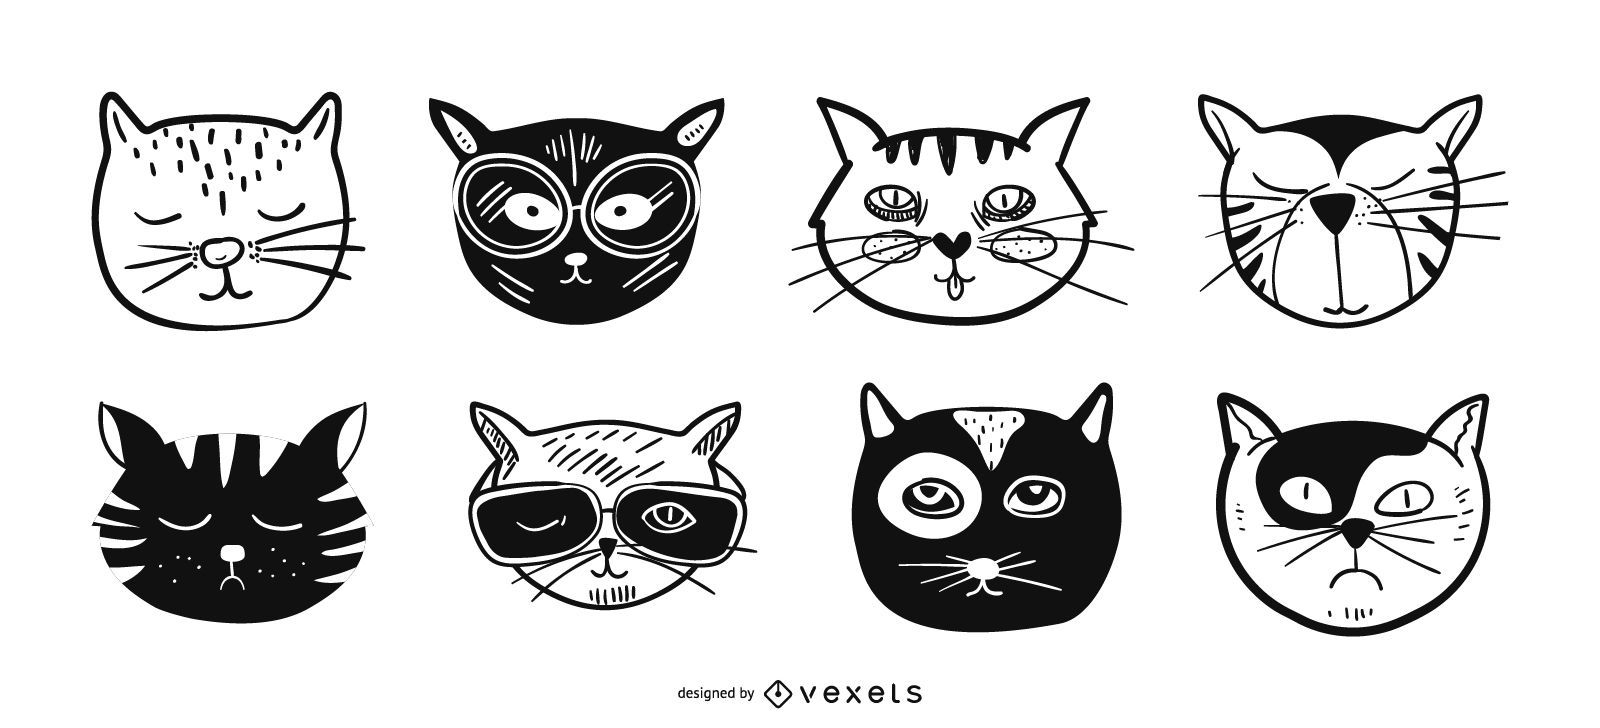 Cat avatars illustration set